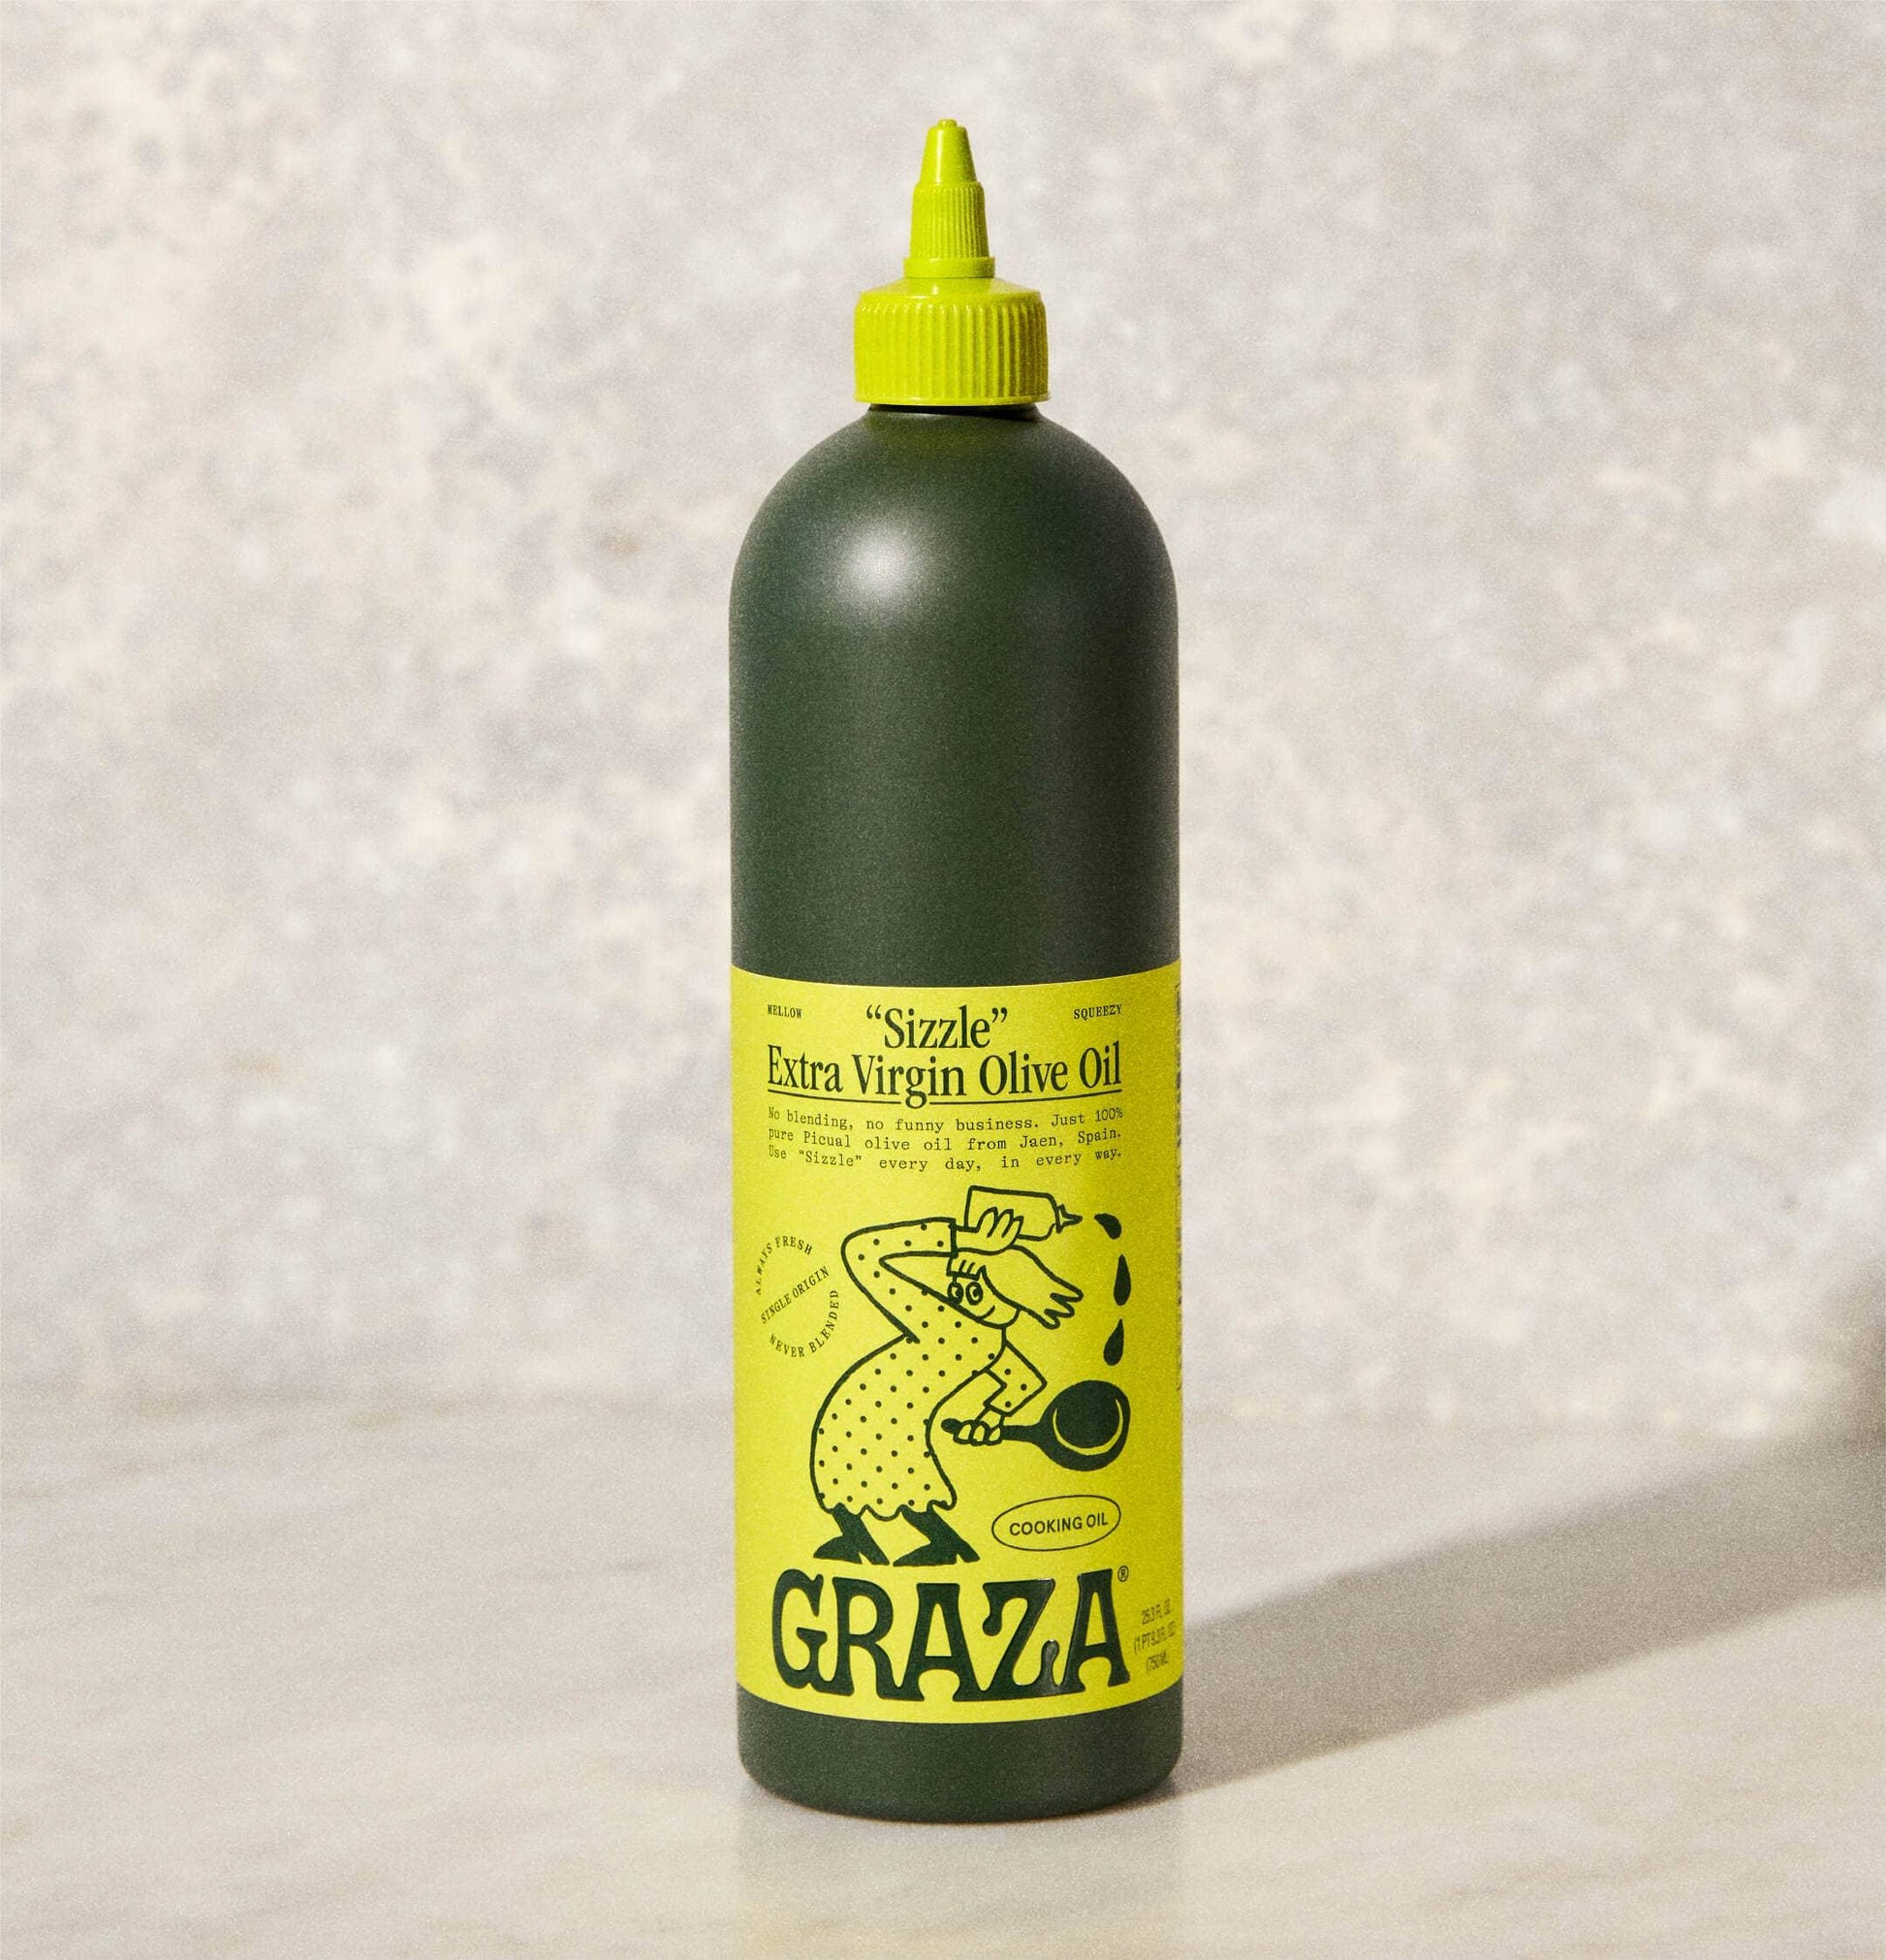 Graza "Sizzle" Olive Oil - Haven